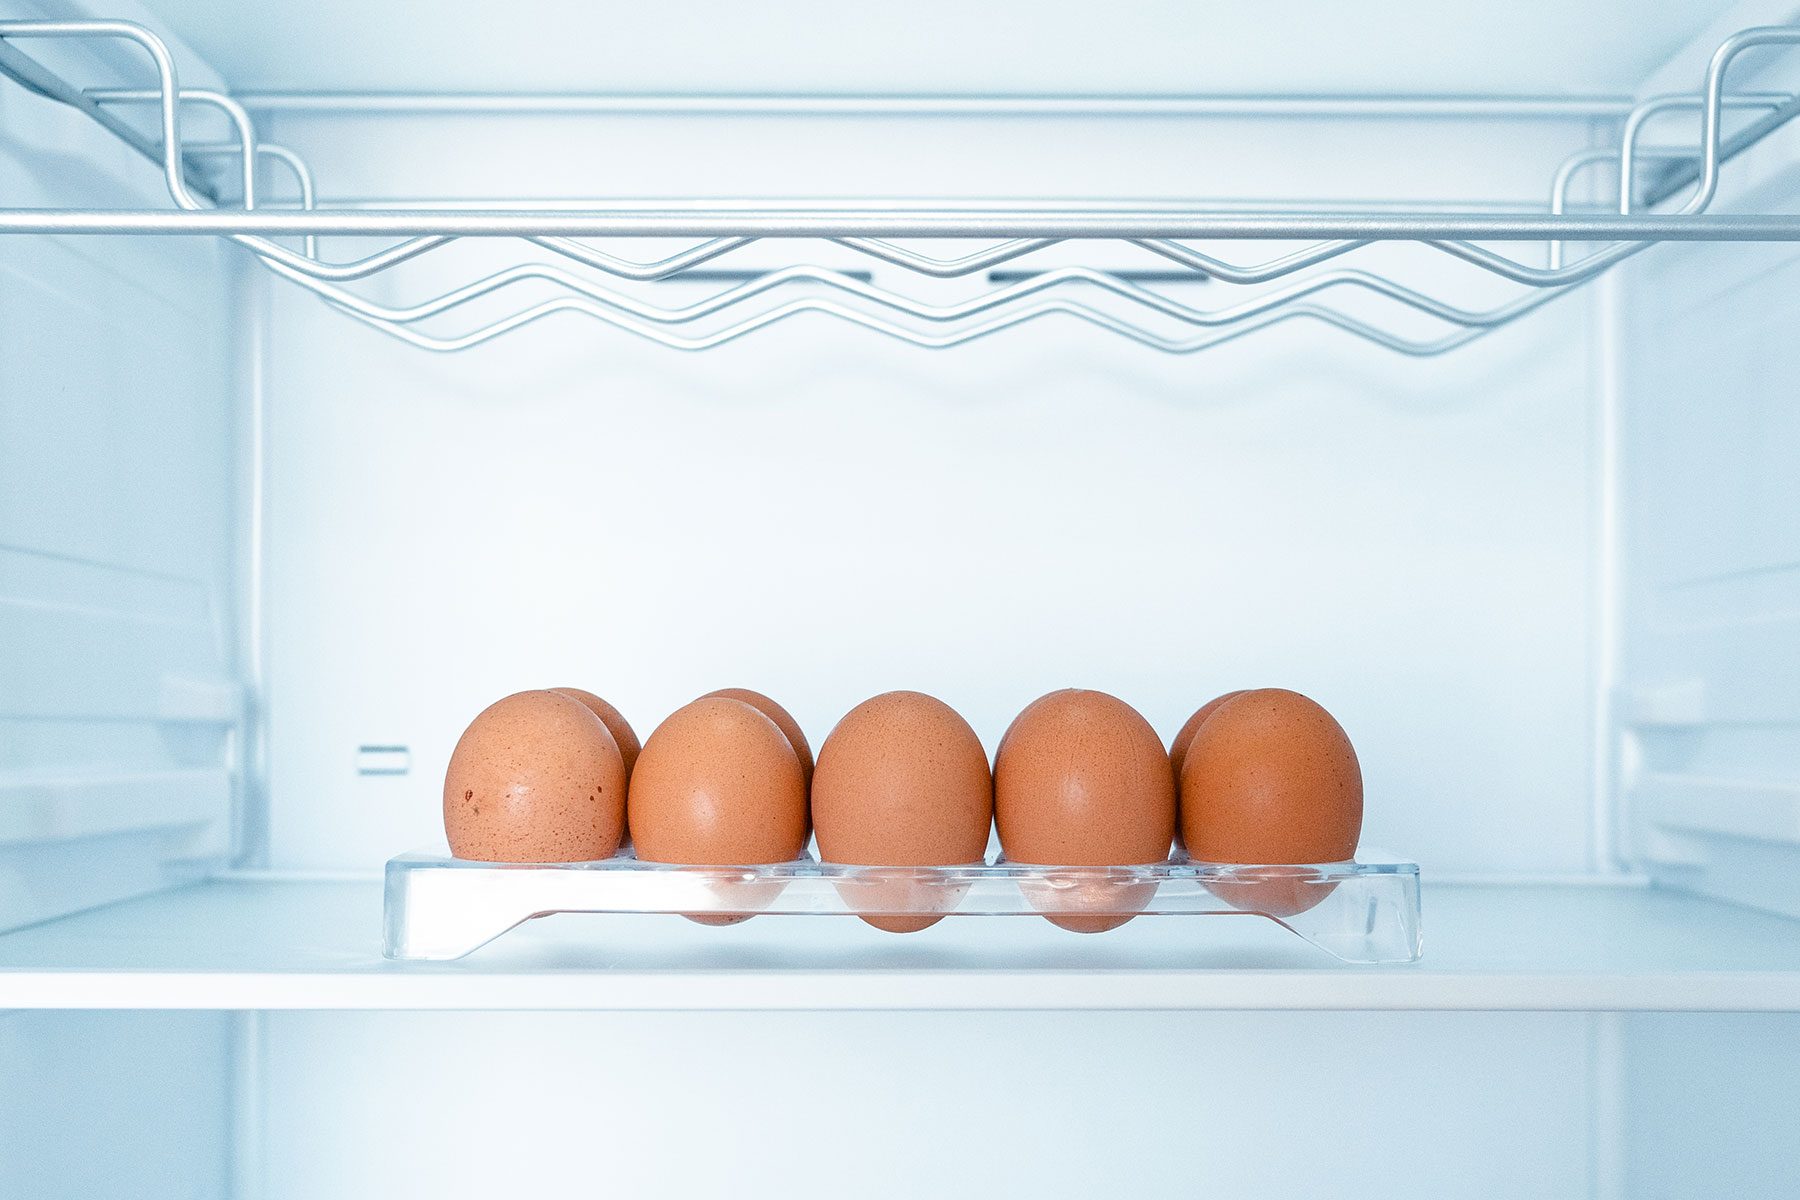 carton of eggs in middle shelf of the fridge